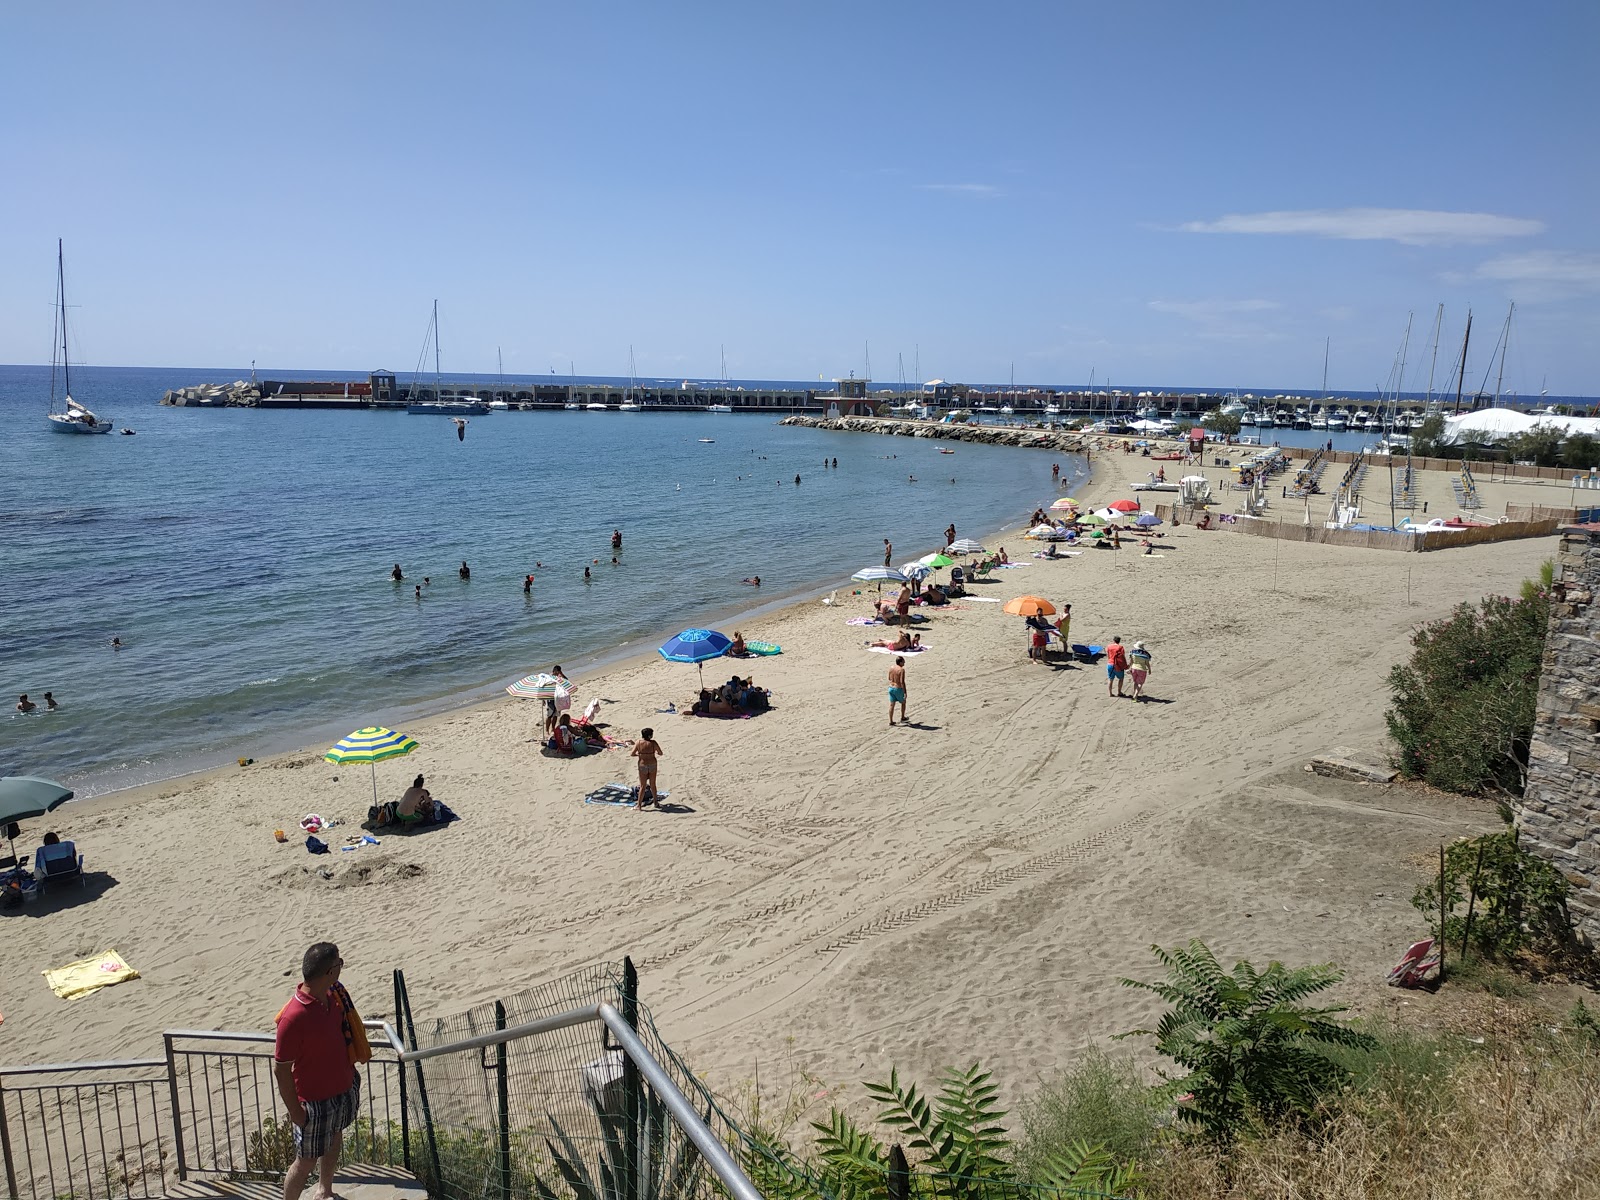 Fotografie cu Spiaggia del Porto Acciaroli cu o suprafață de nisip maro fin